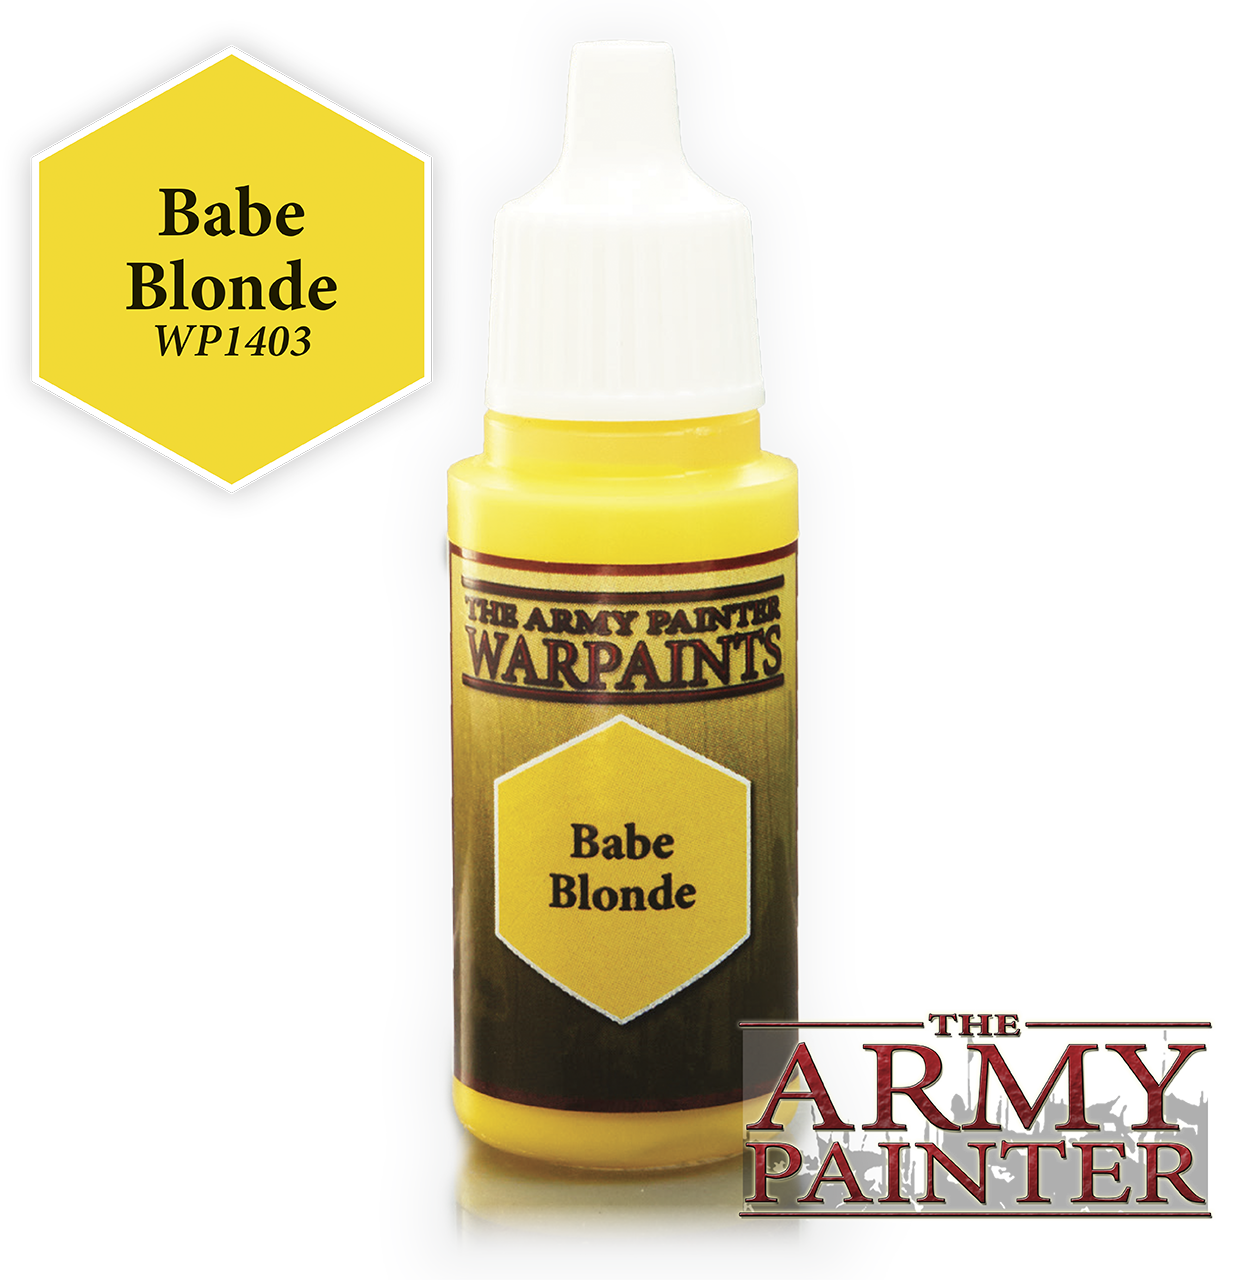 Babe Blonde - Army Painter Warpaints